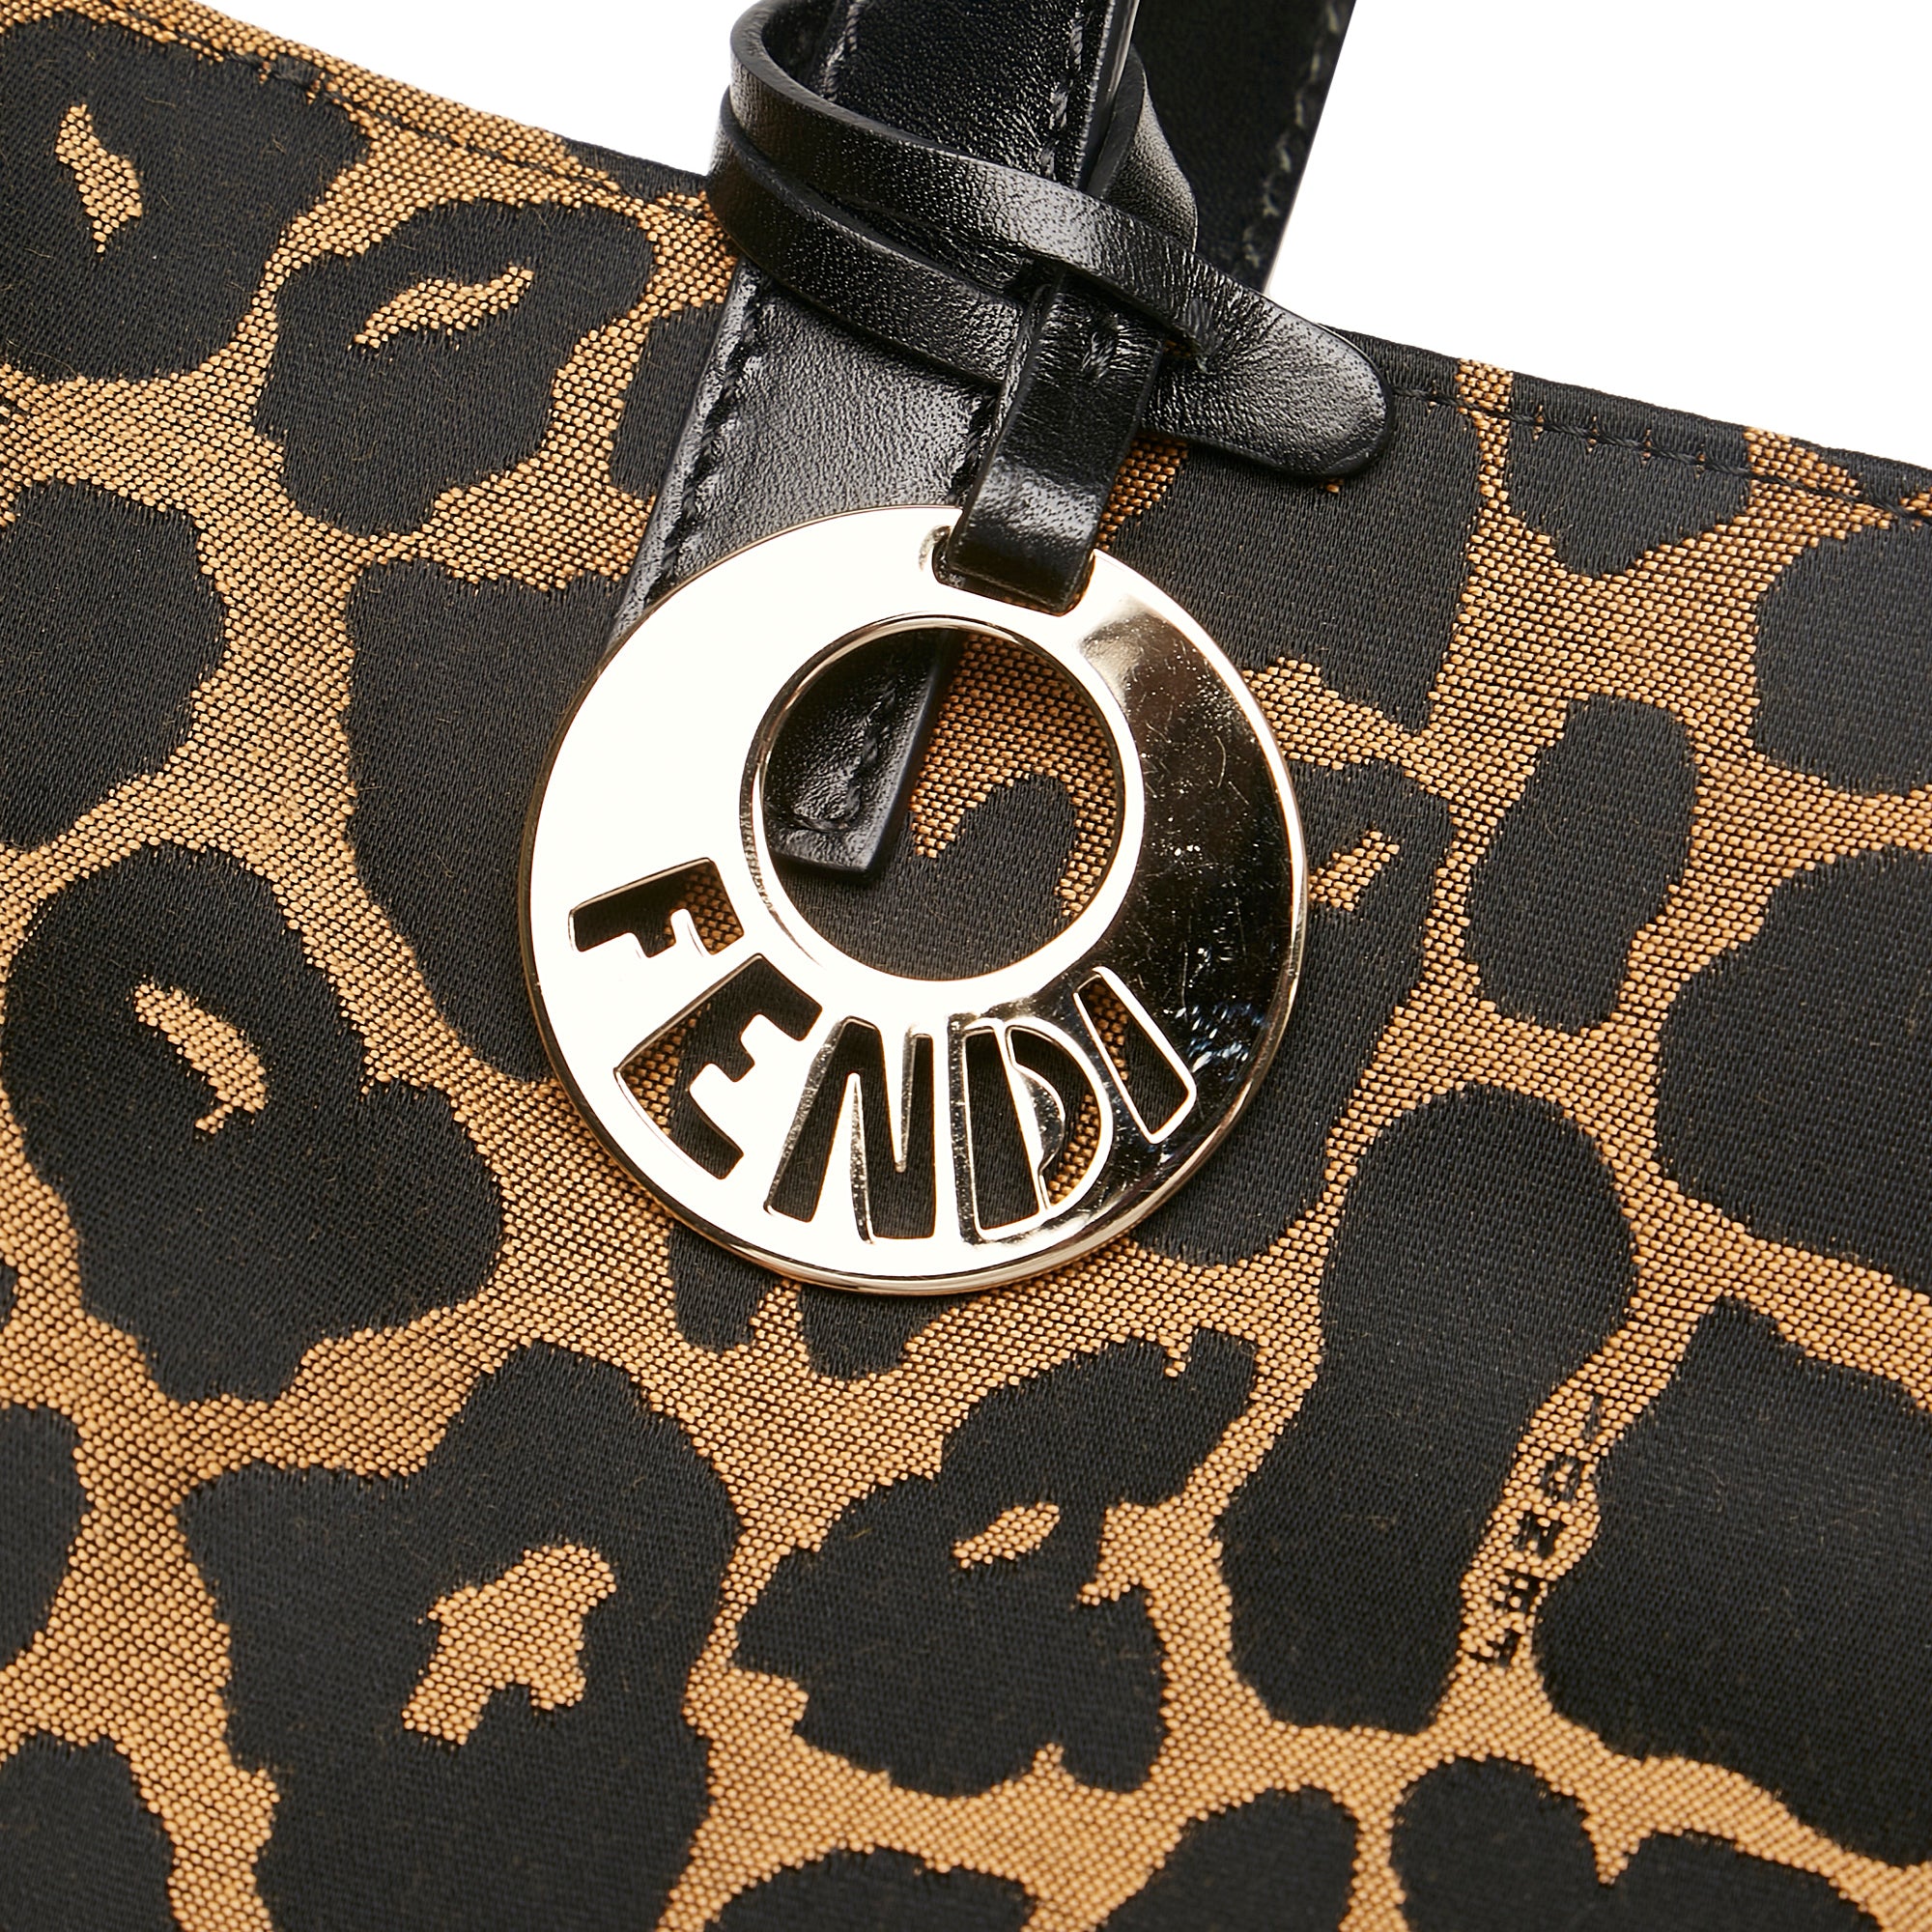 Fendi Ff Logo Print Leather Key Ring Nylon Tote in Brown